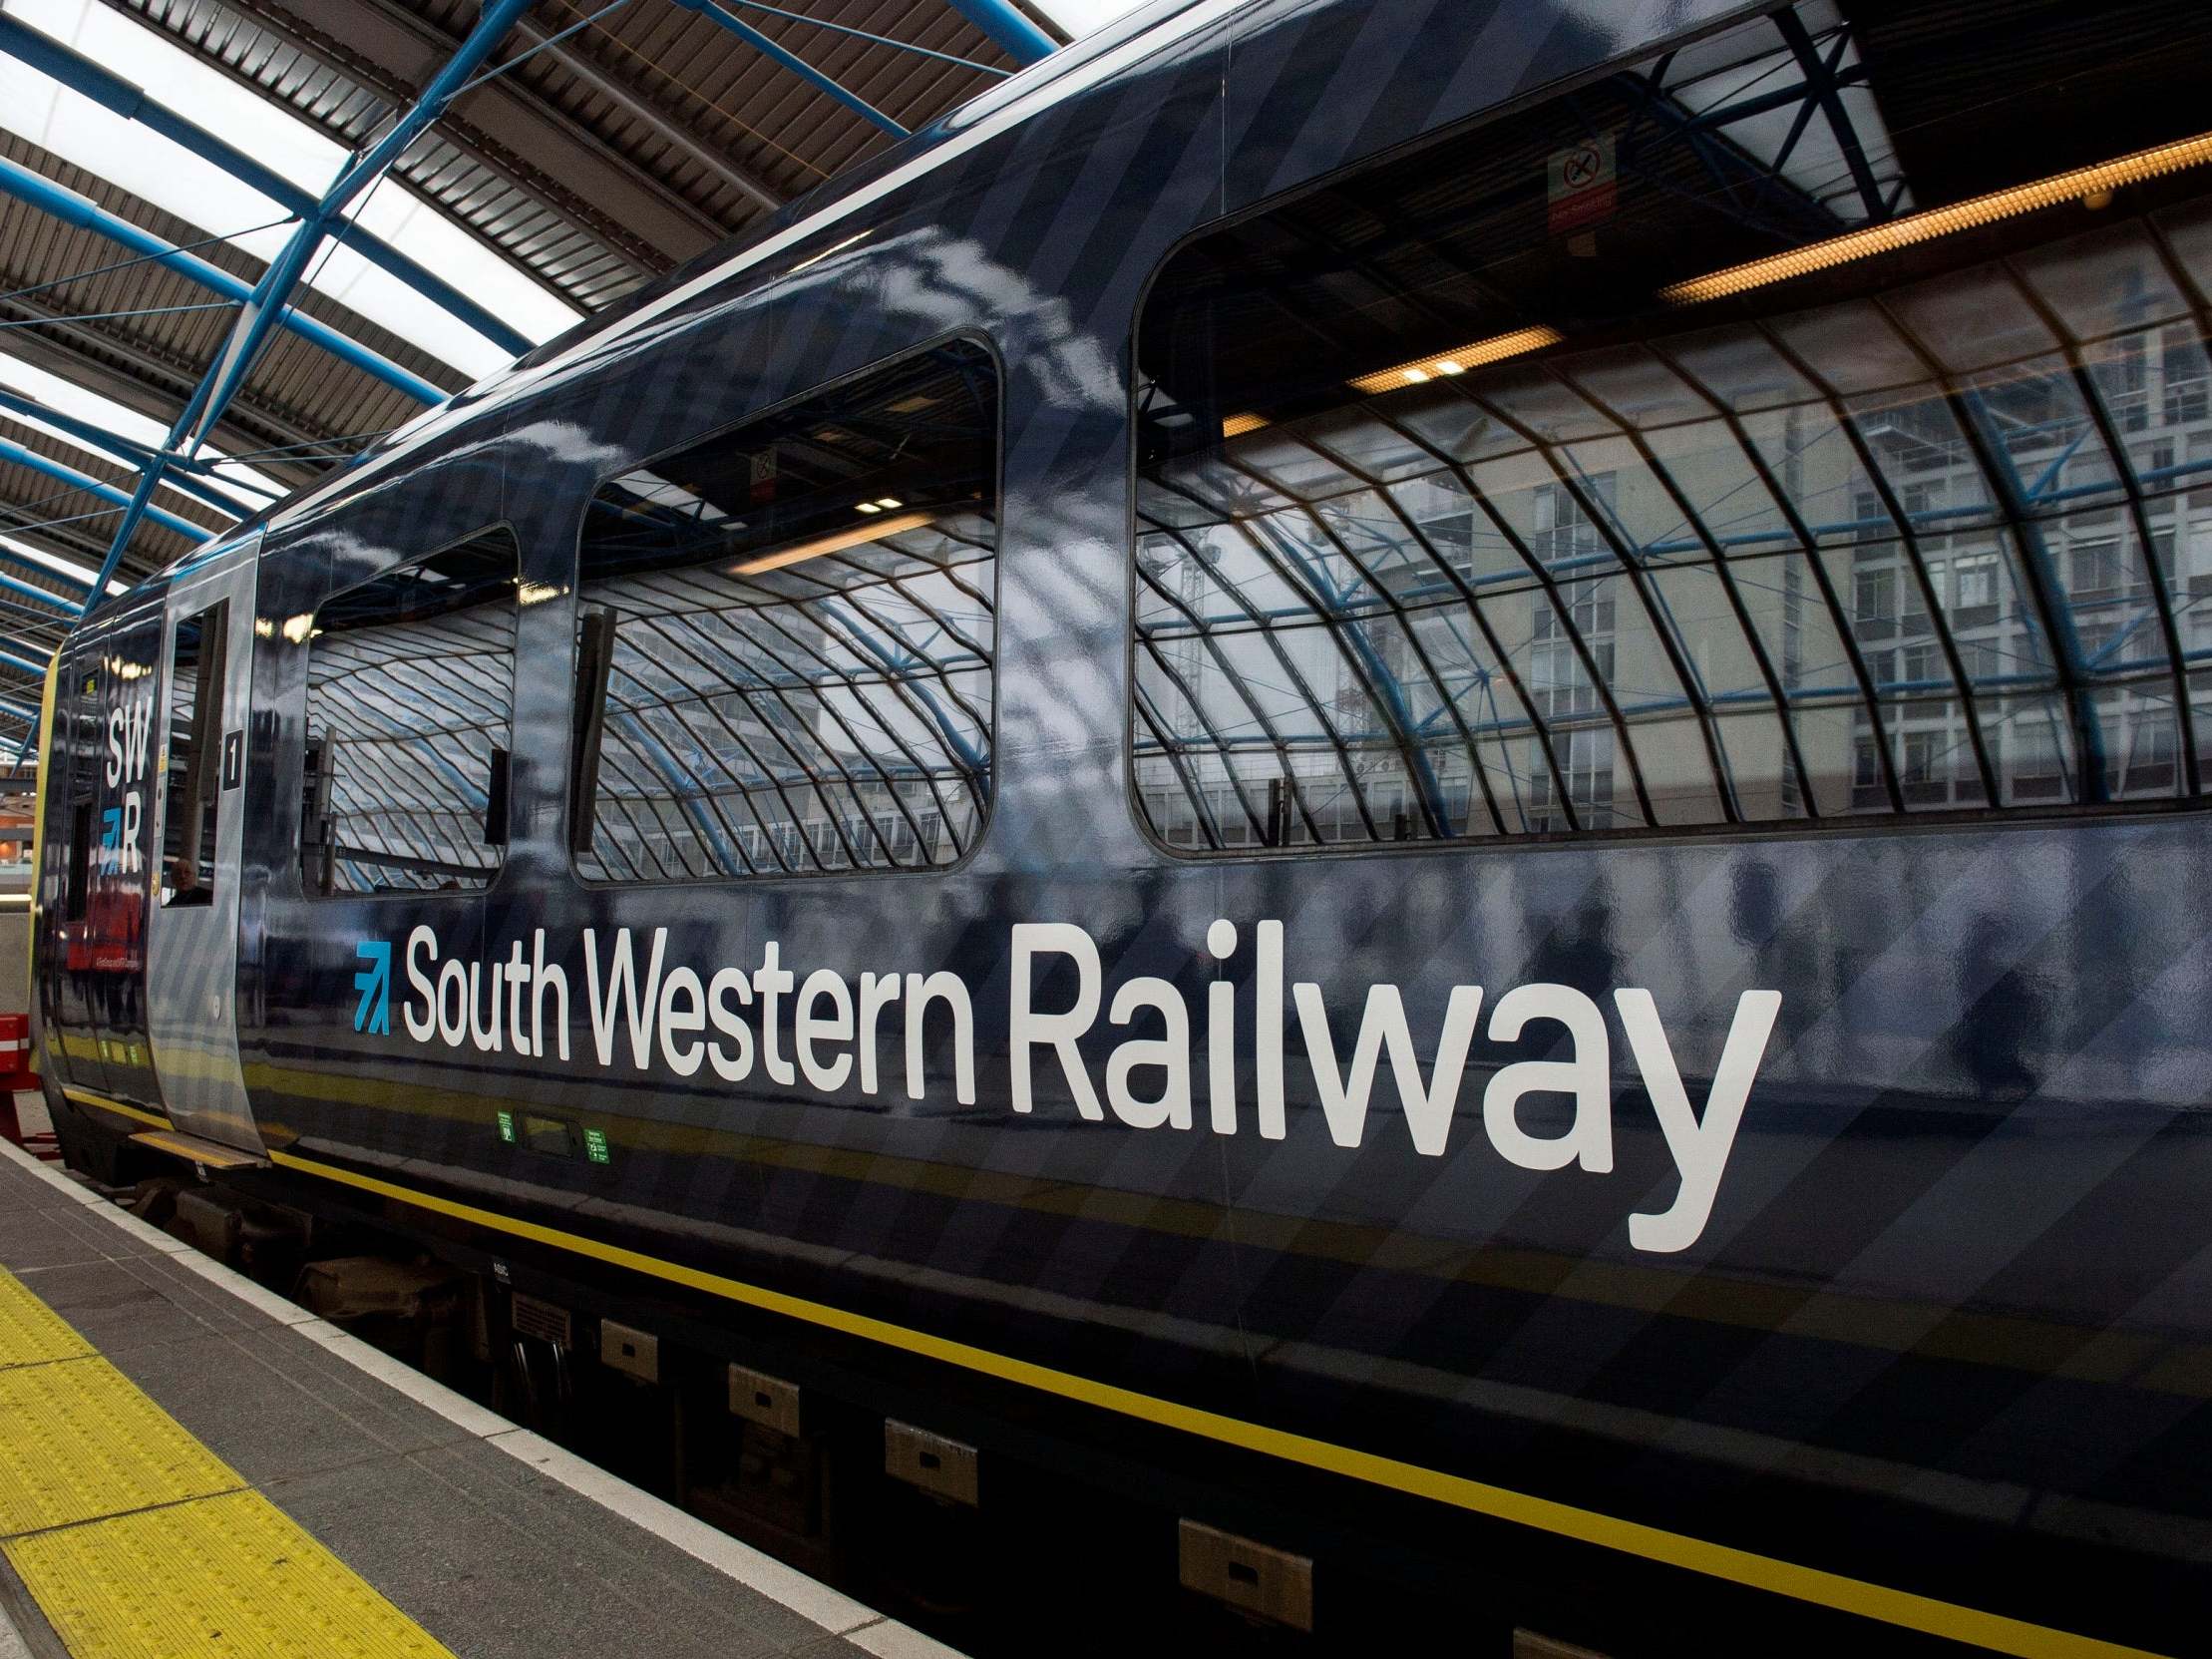 File image of South Western Railway train in London Waterloo station.